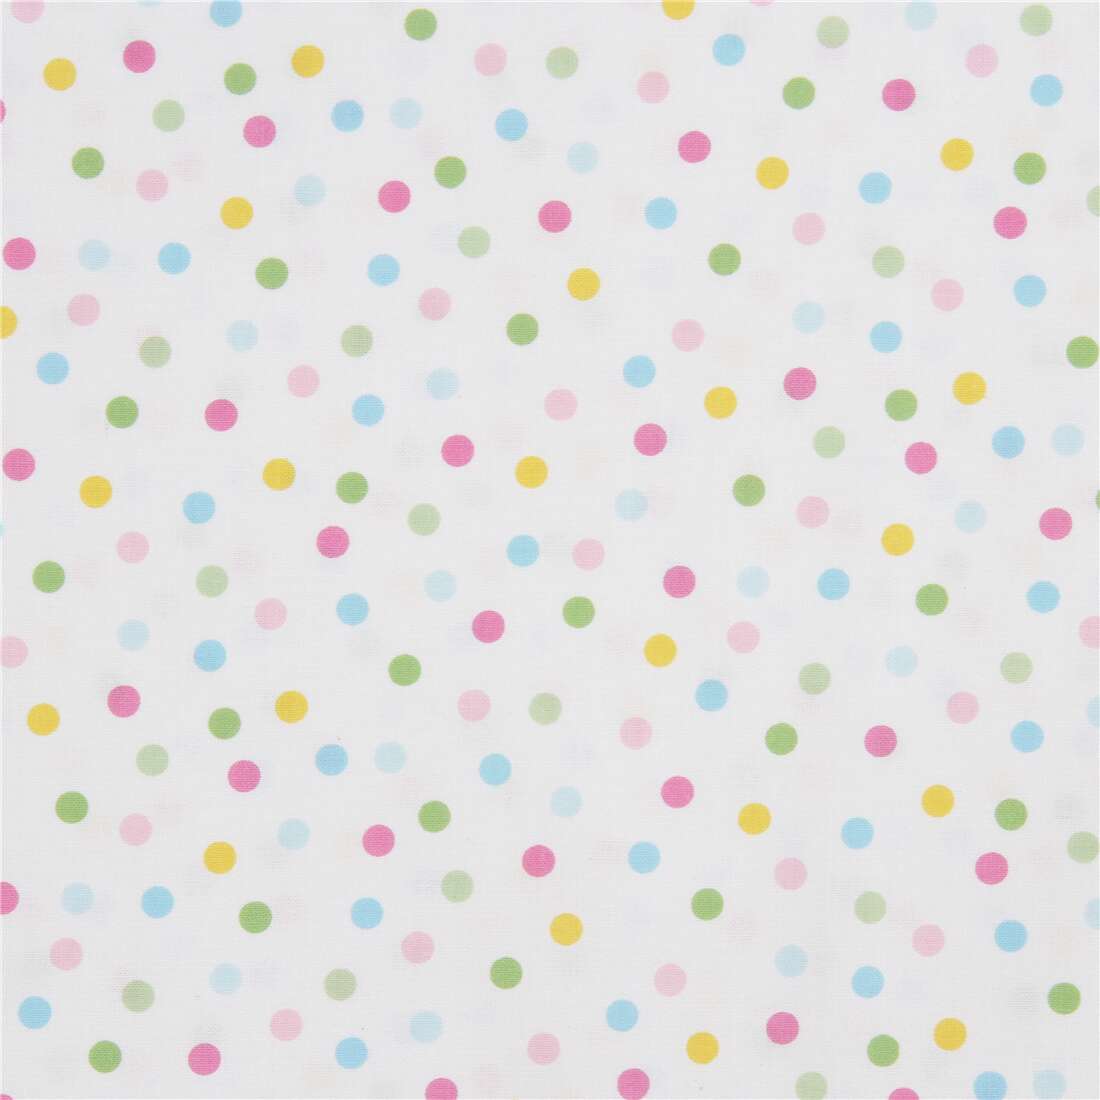 robert-kaufman-white-fabric-with-pastel-polka-dots-modes4u